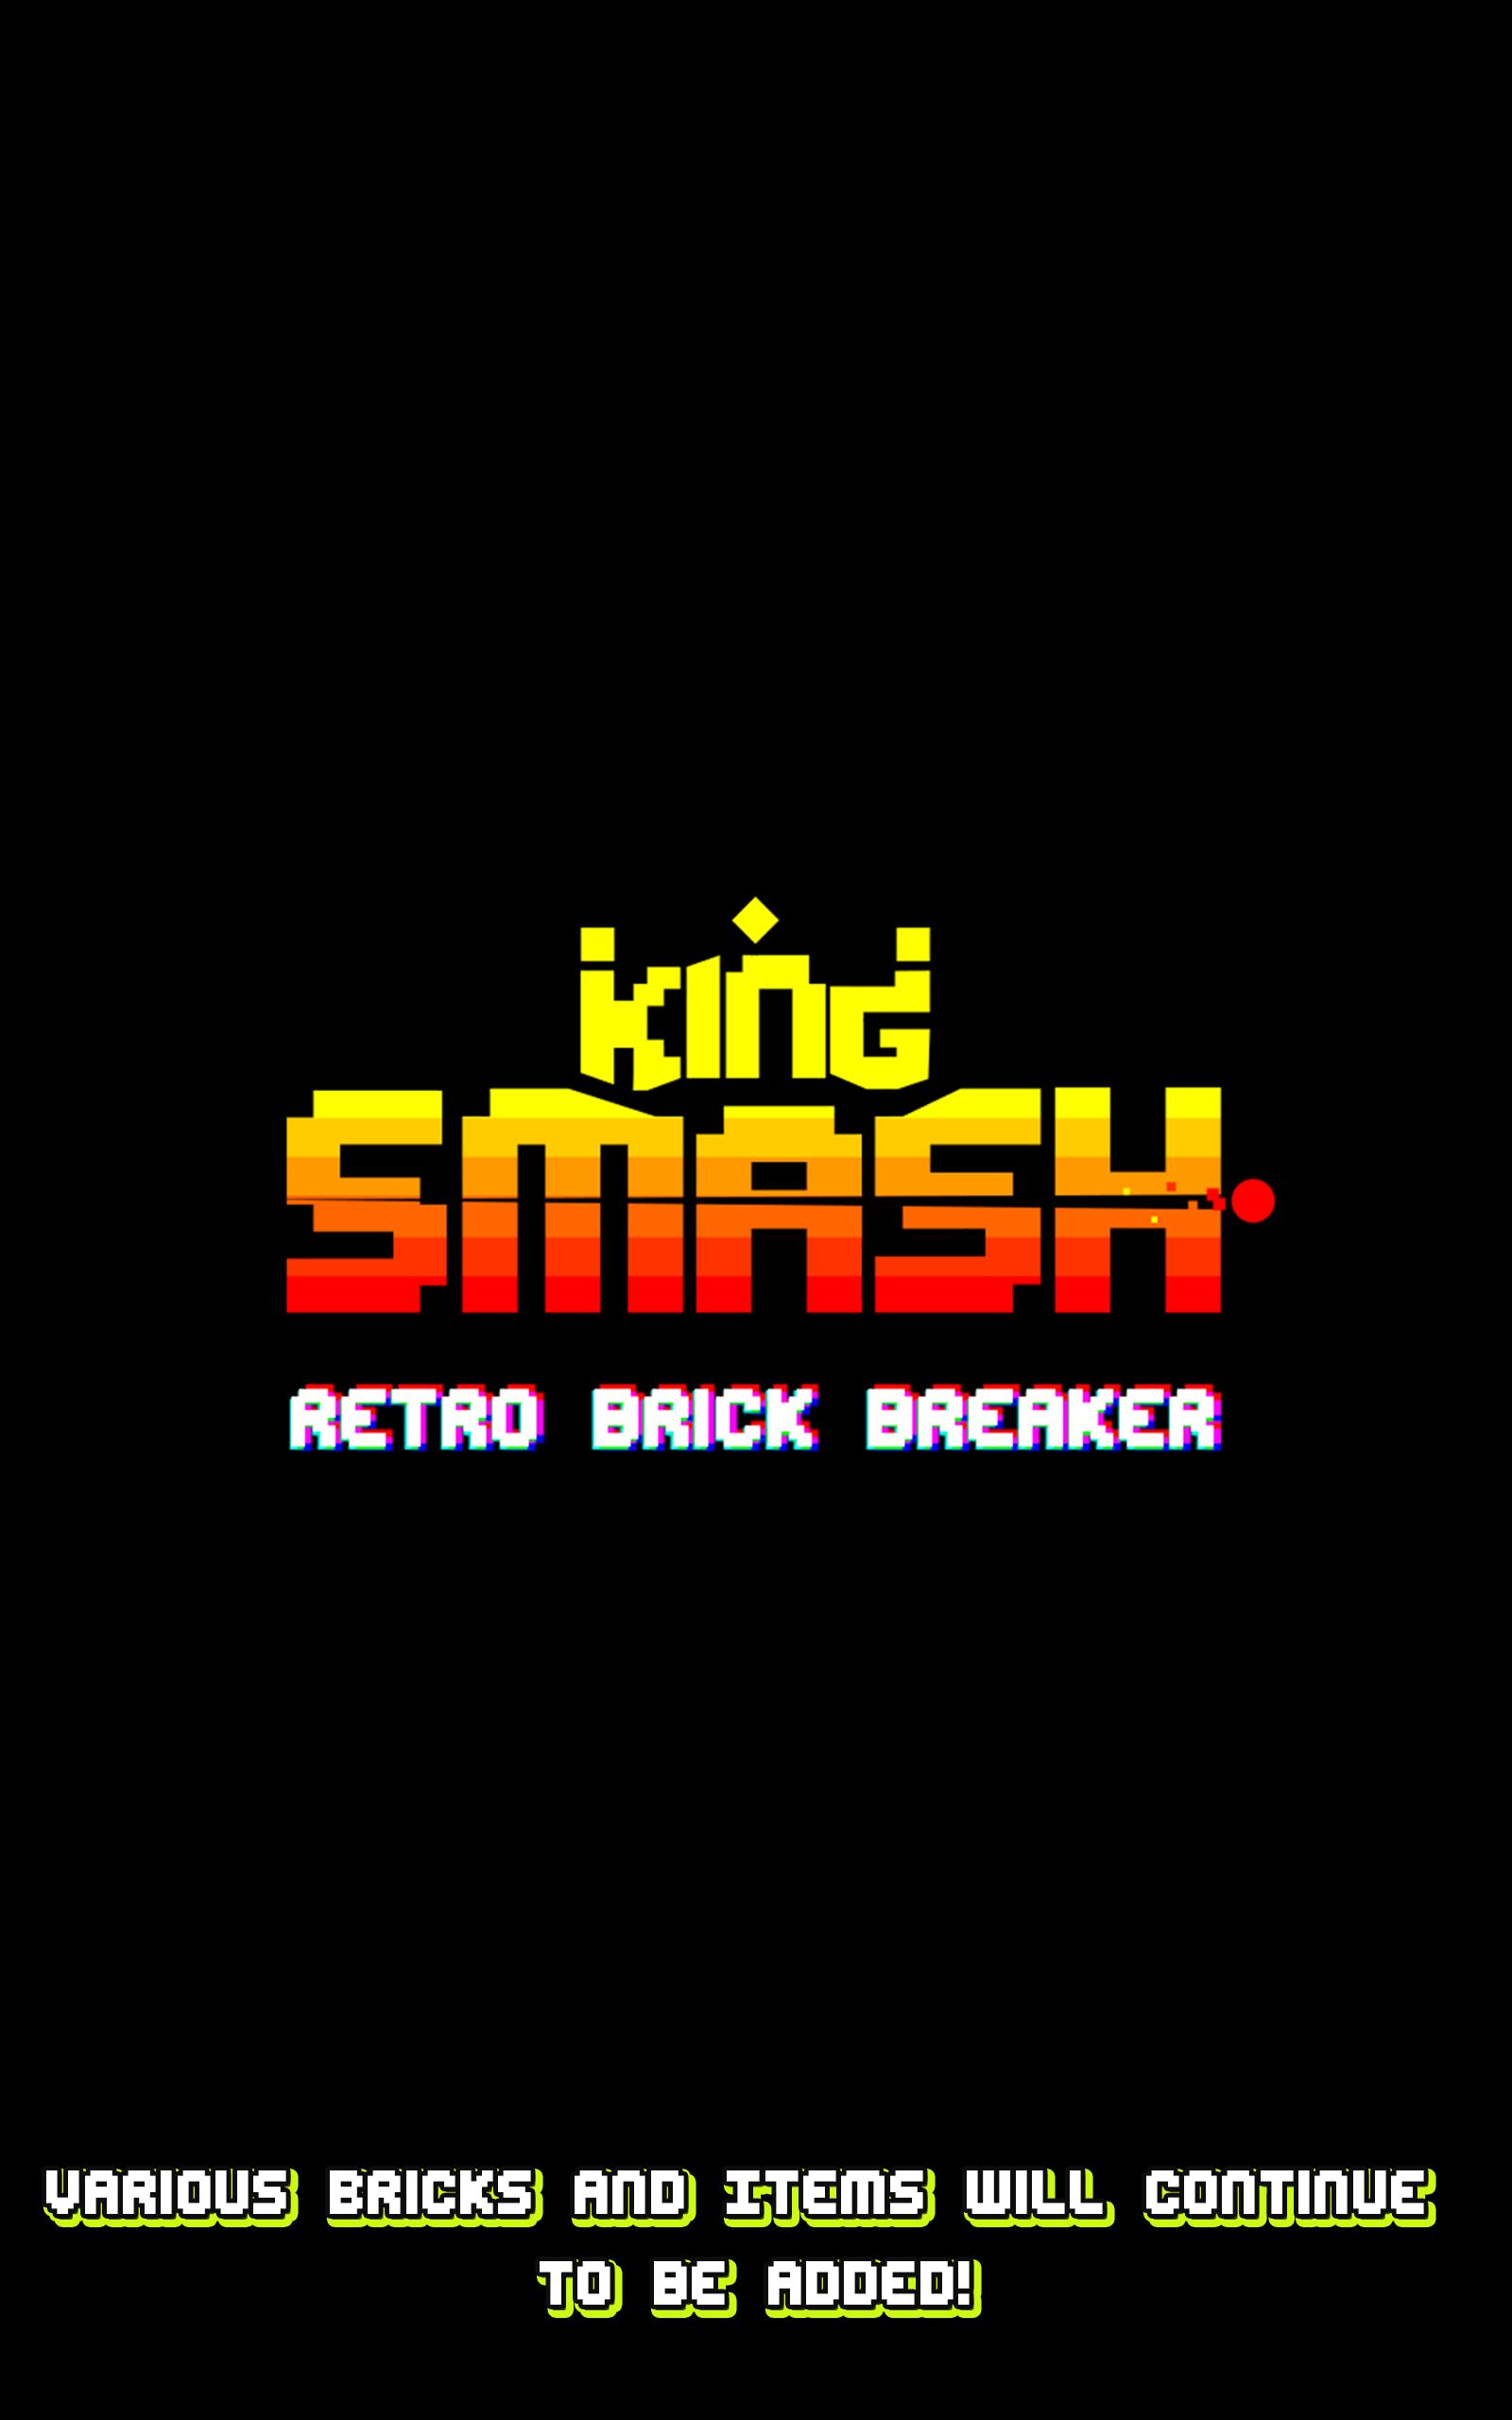 Mobile Brick Breaker Smash King Retro Games For Android Apk Download